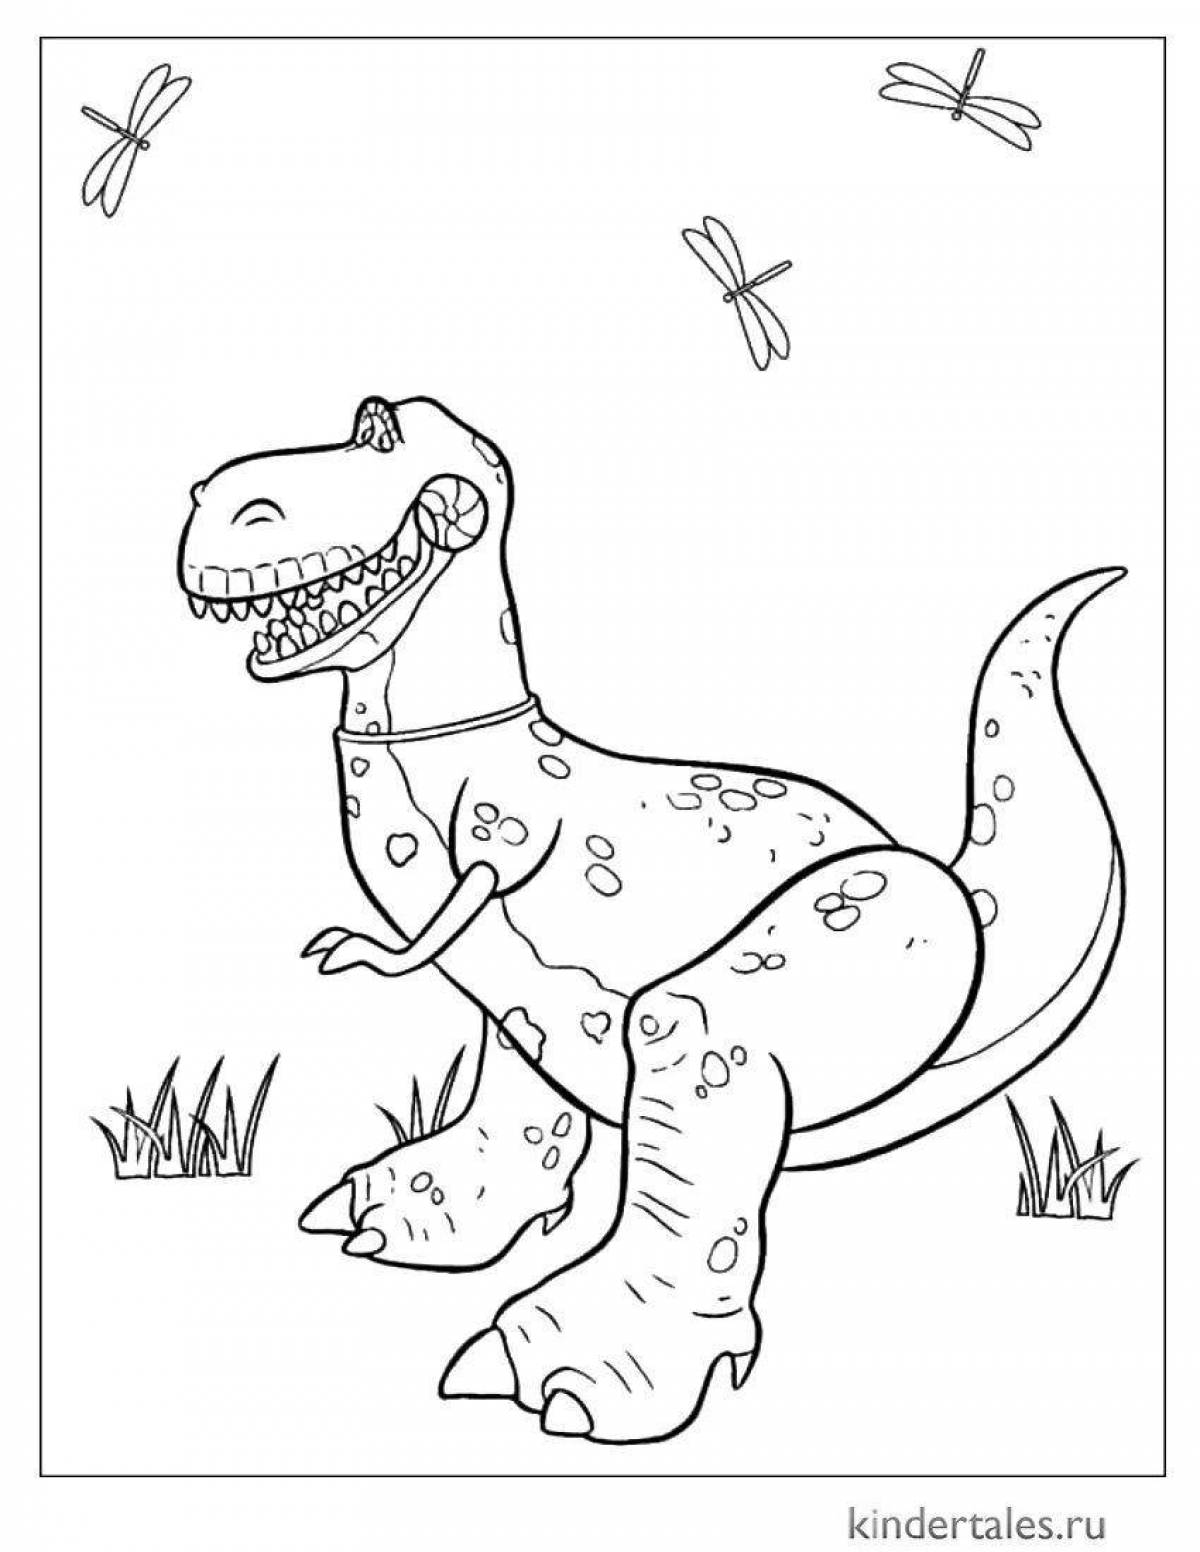 Tempting coloring dinosaurs